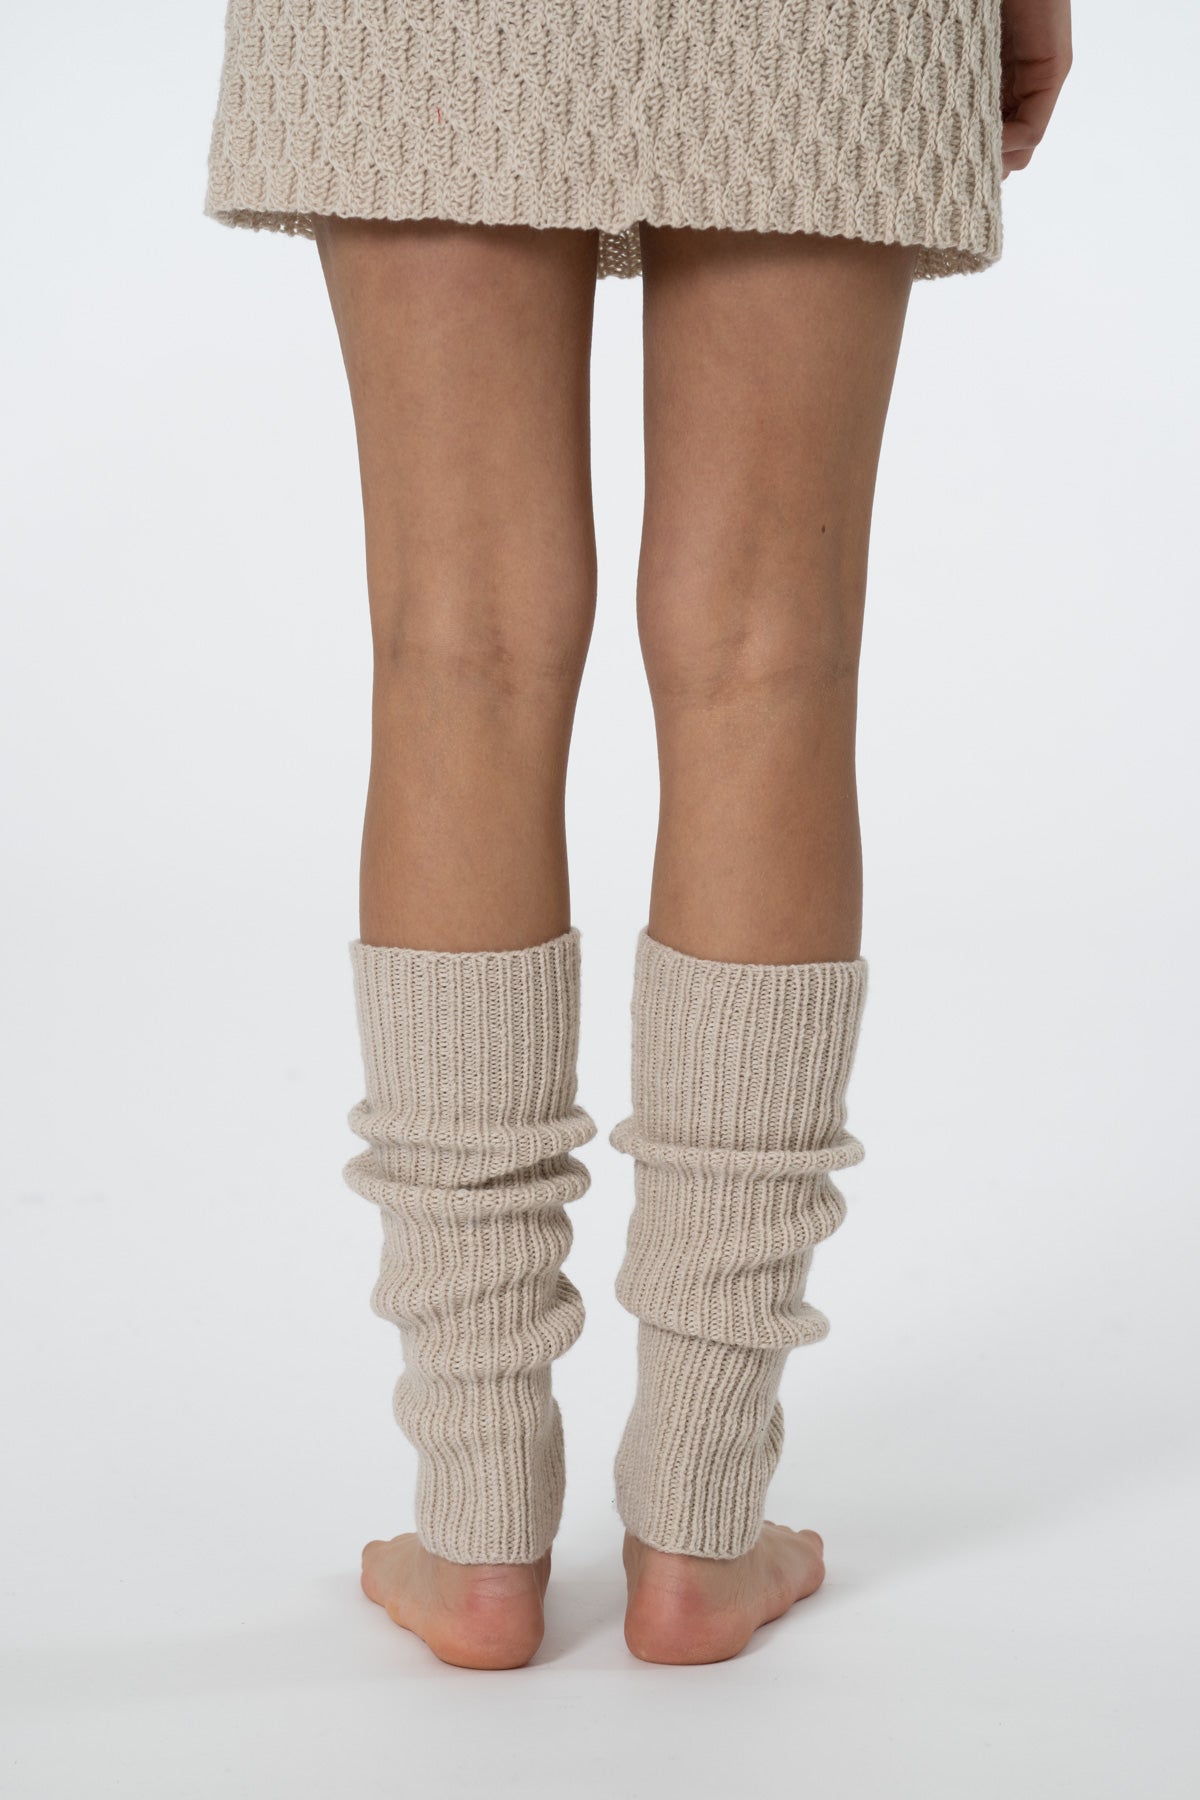 Dinadi Merino Handknit leg warmers in Almond white Fall 23/24 